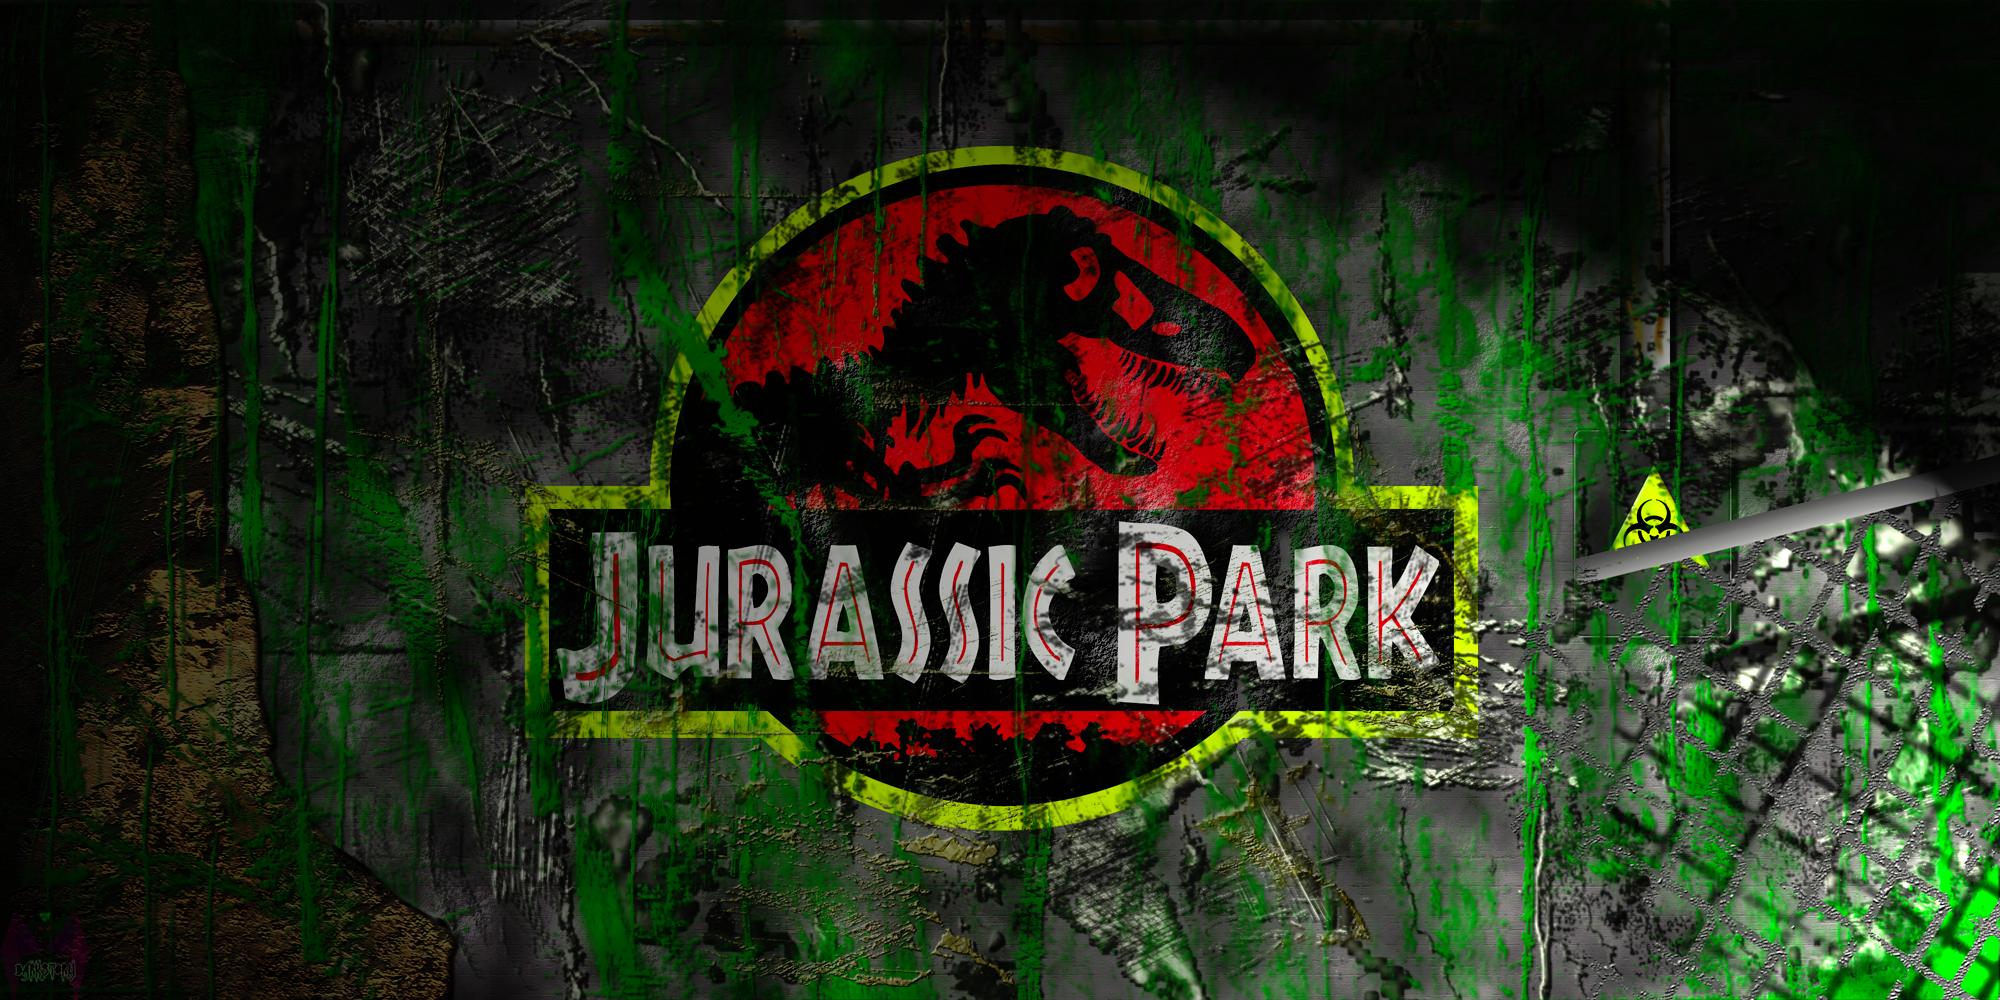 Jurassic Park Wallpaper Image Le Fancy Mod Db